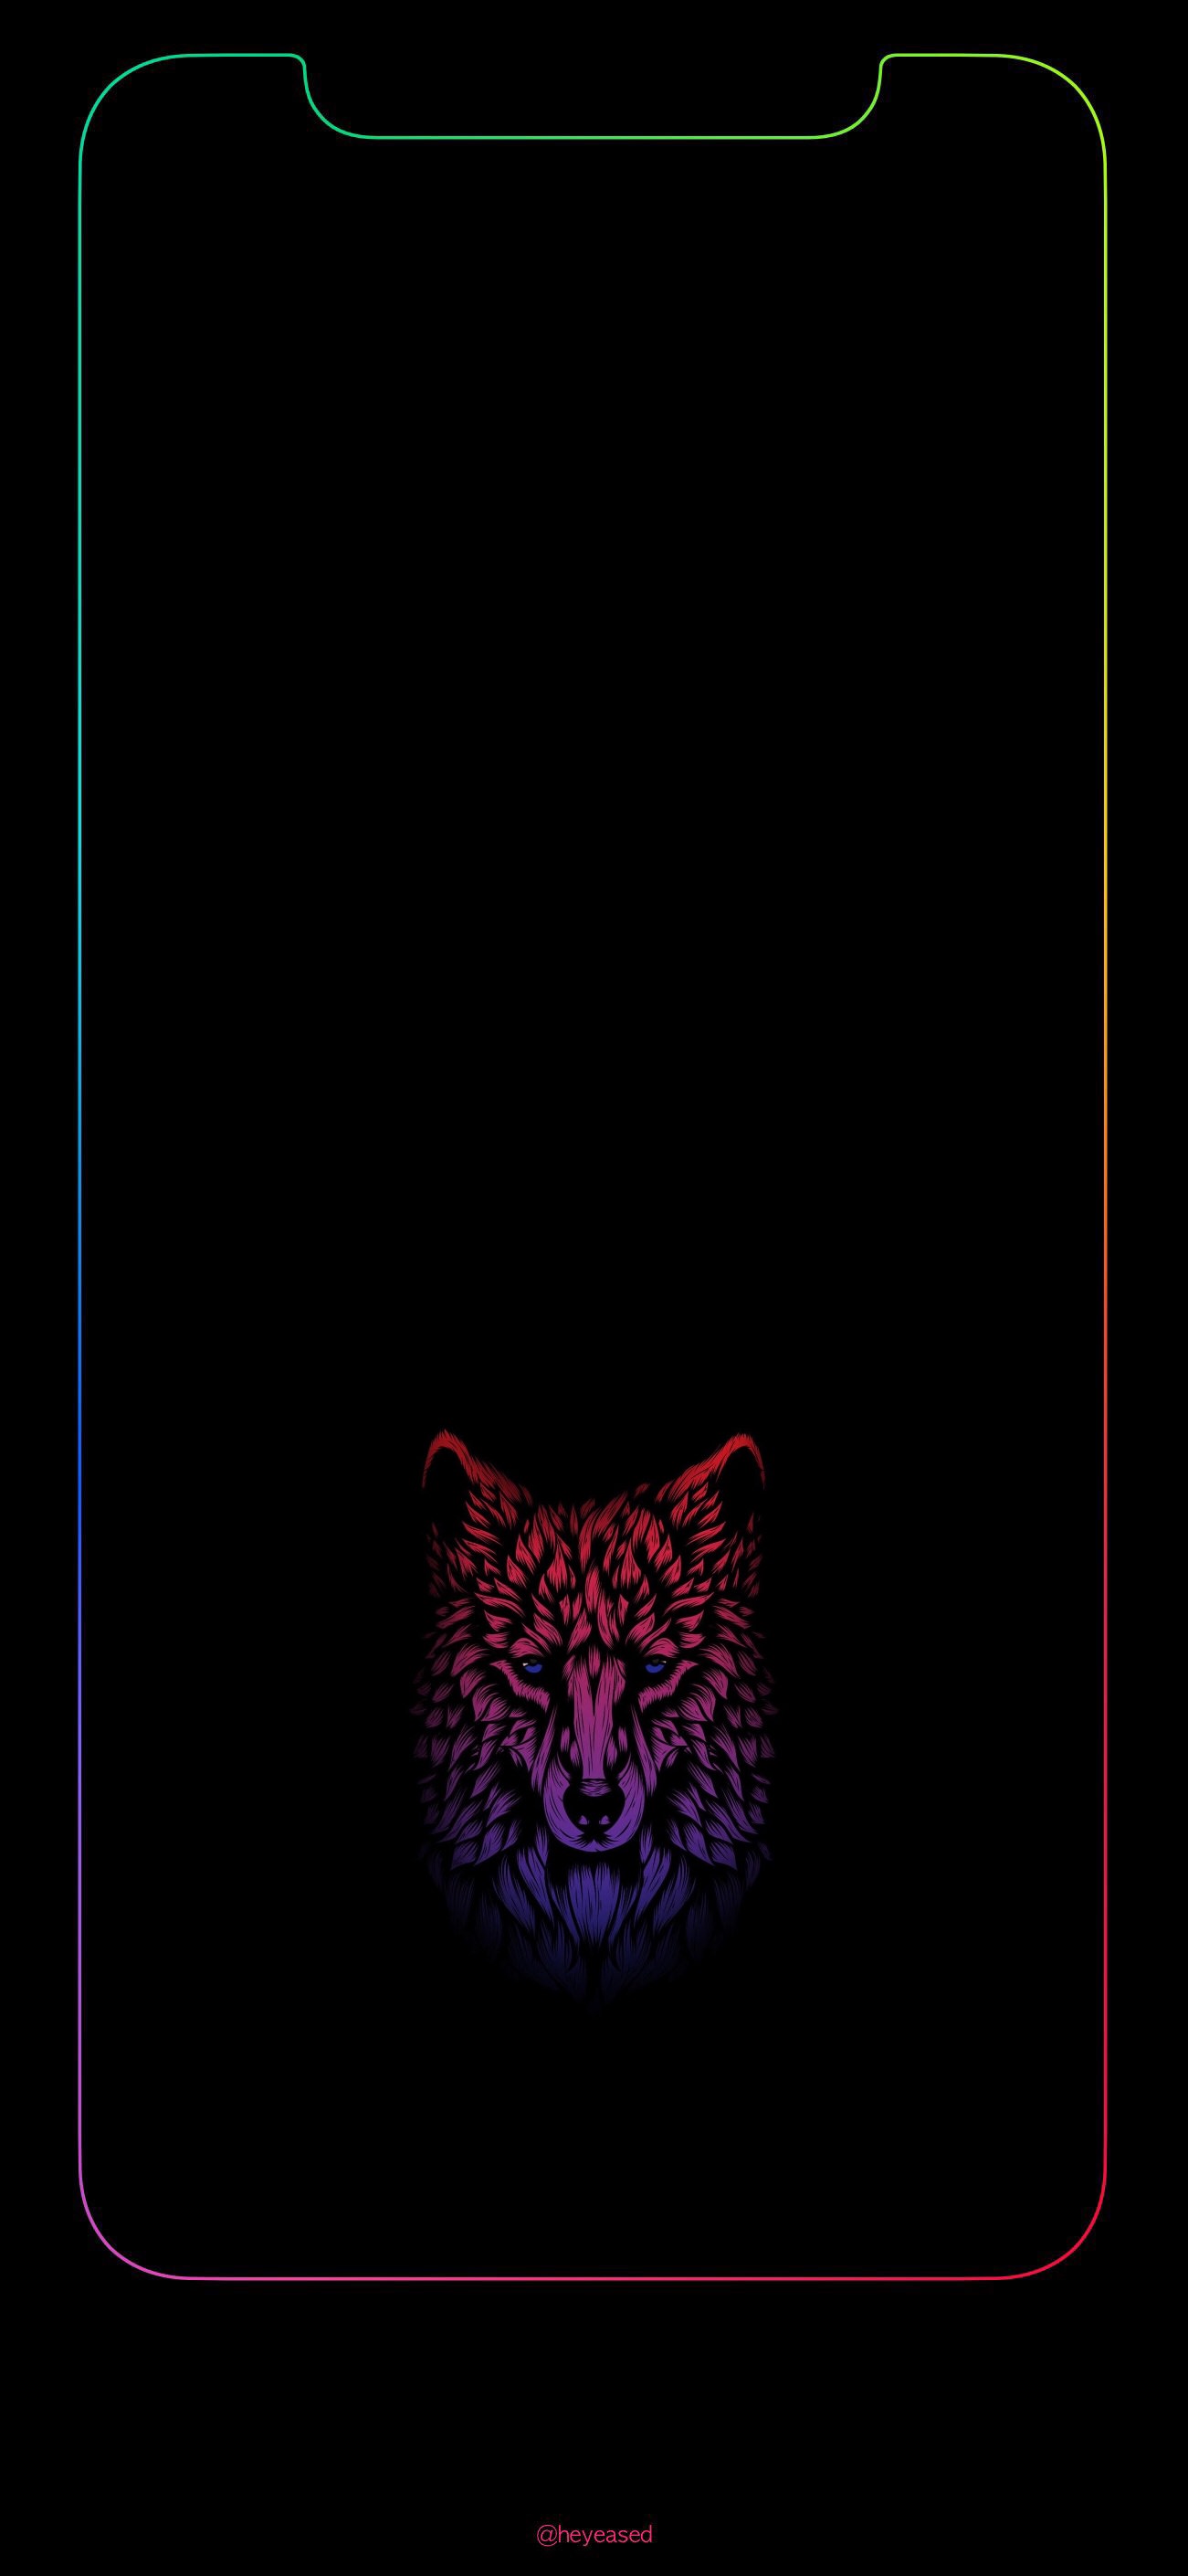 wallpaper iphone 7 lion